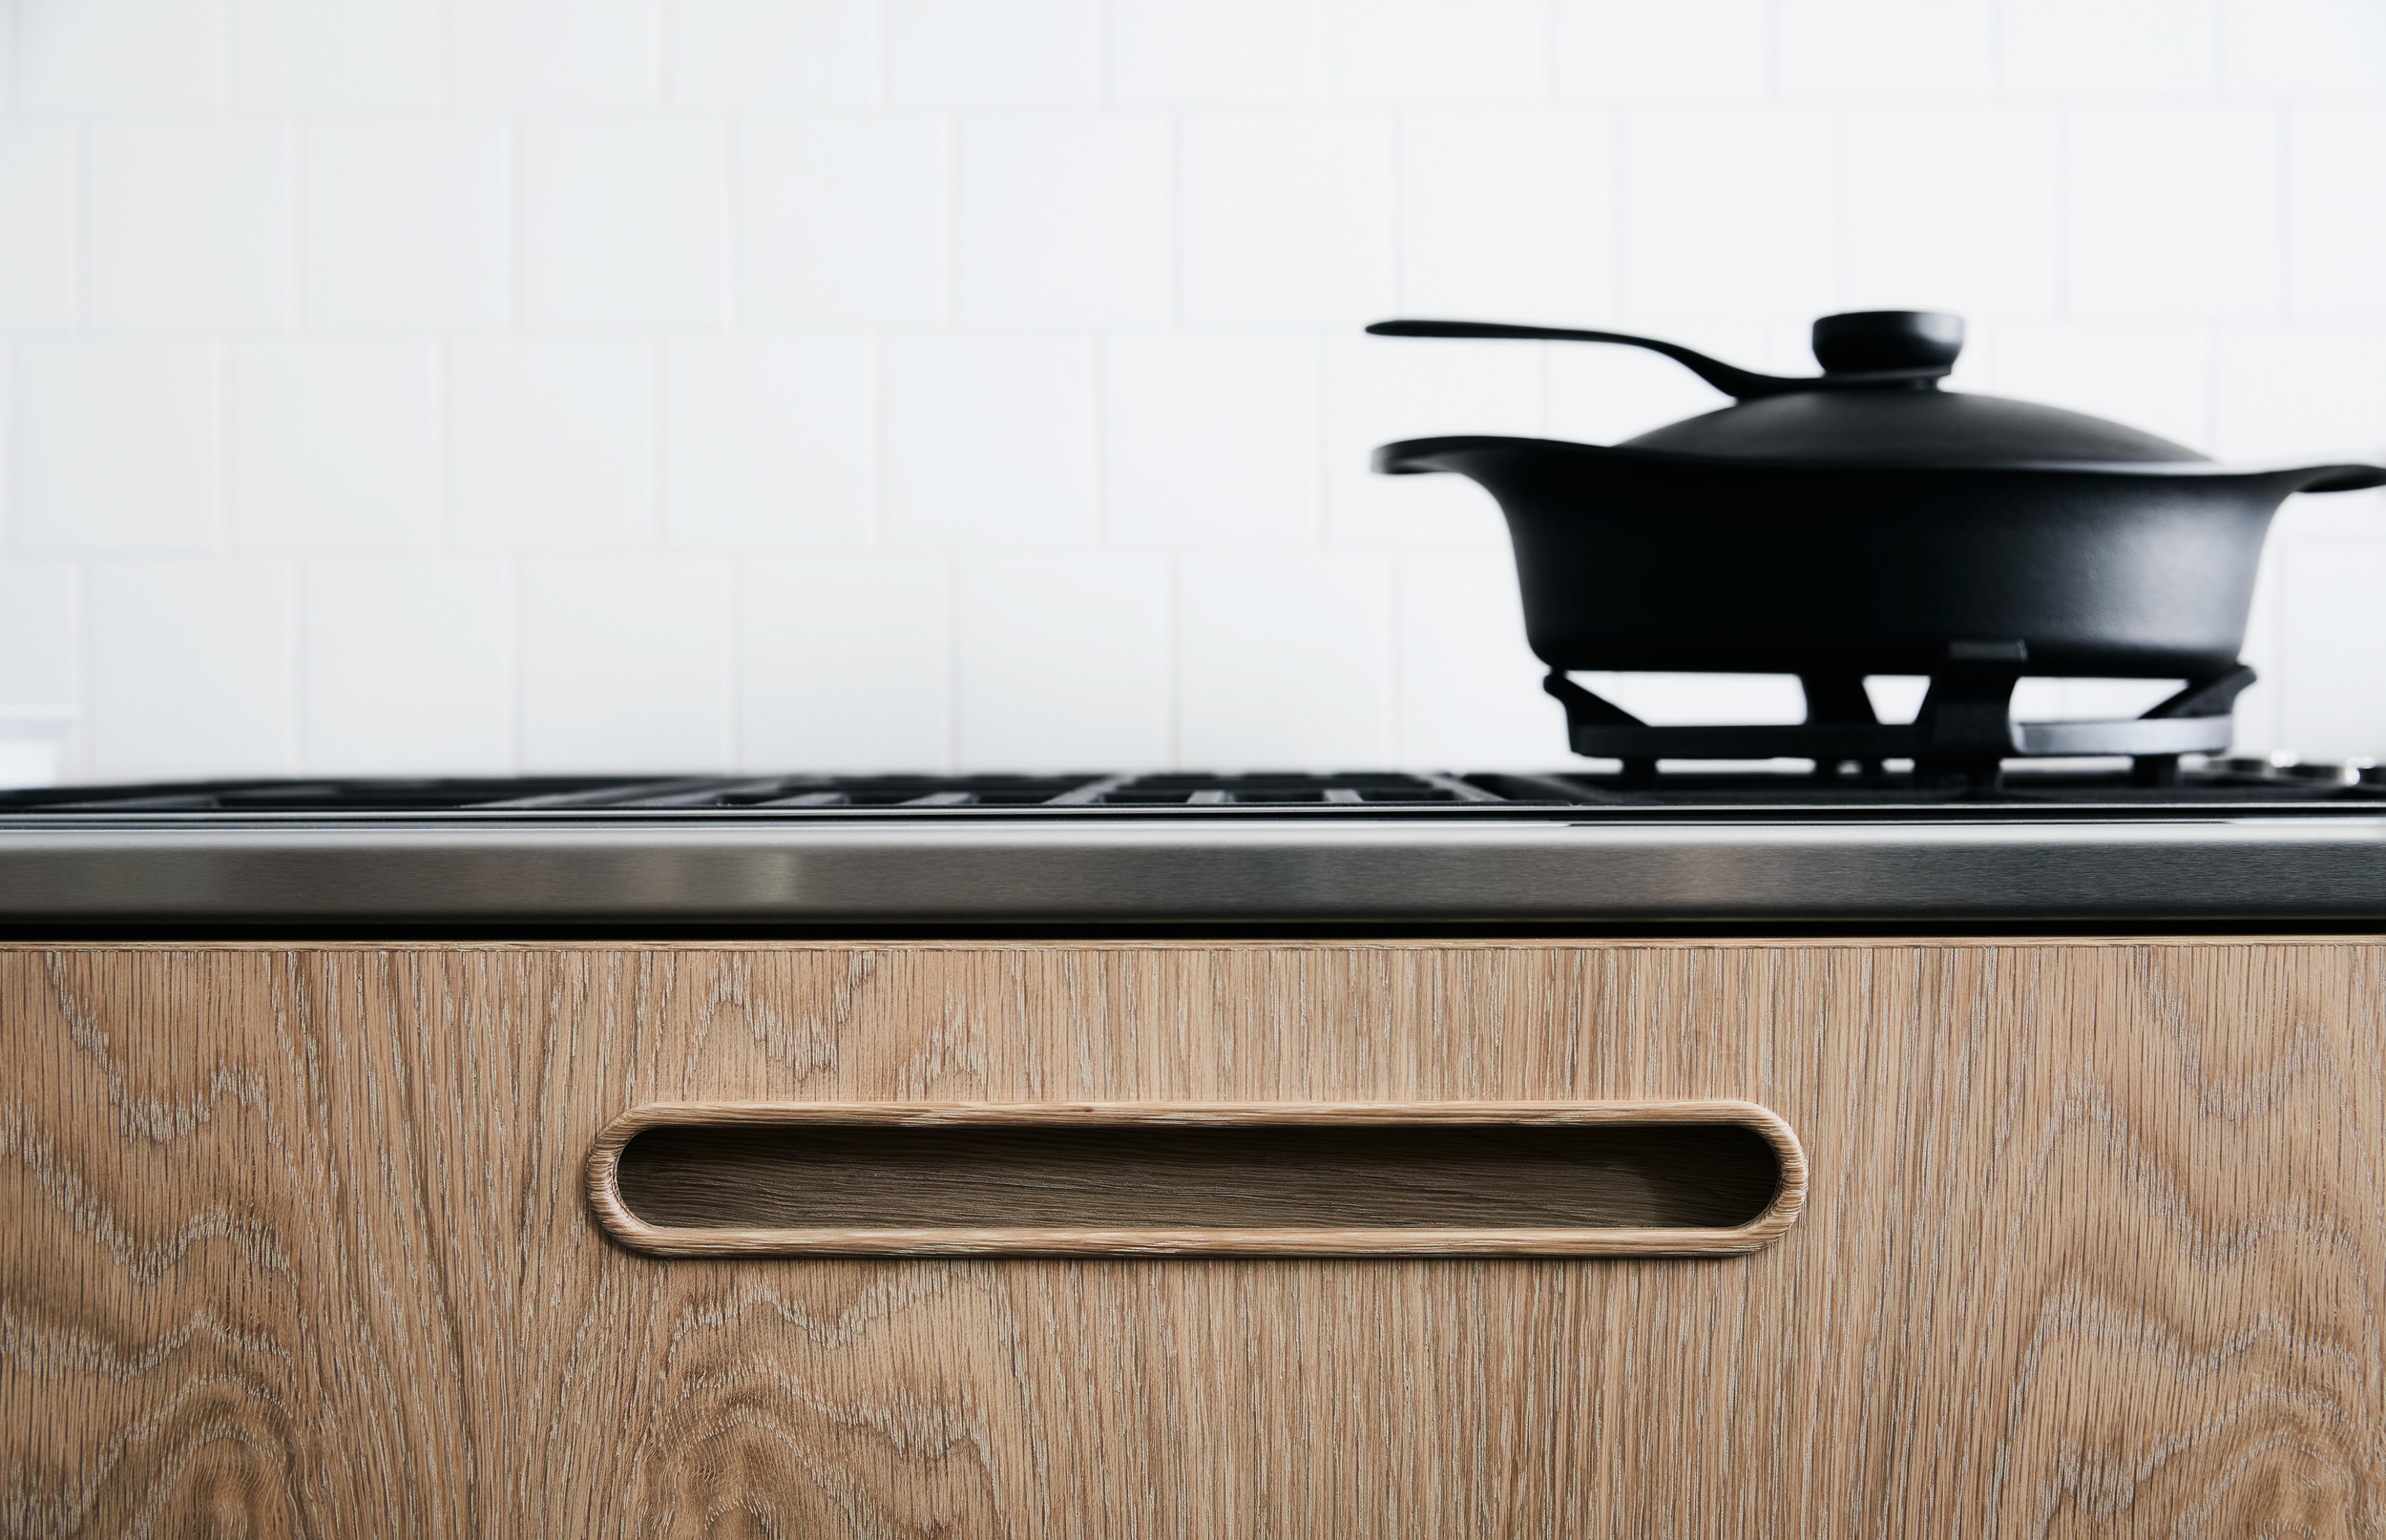 Tableau Cantilever DesignOffice Kitchen System Australia (6).jpg